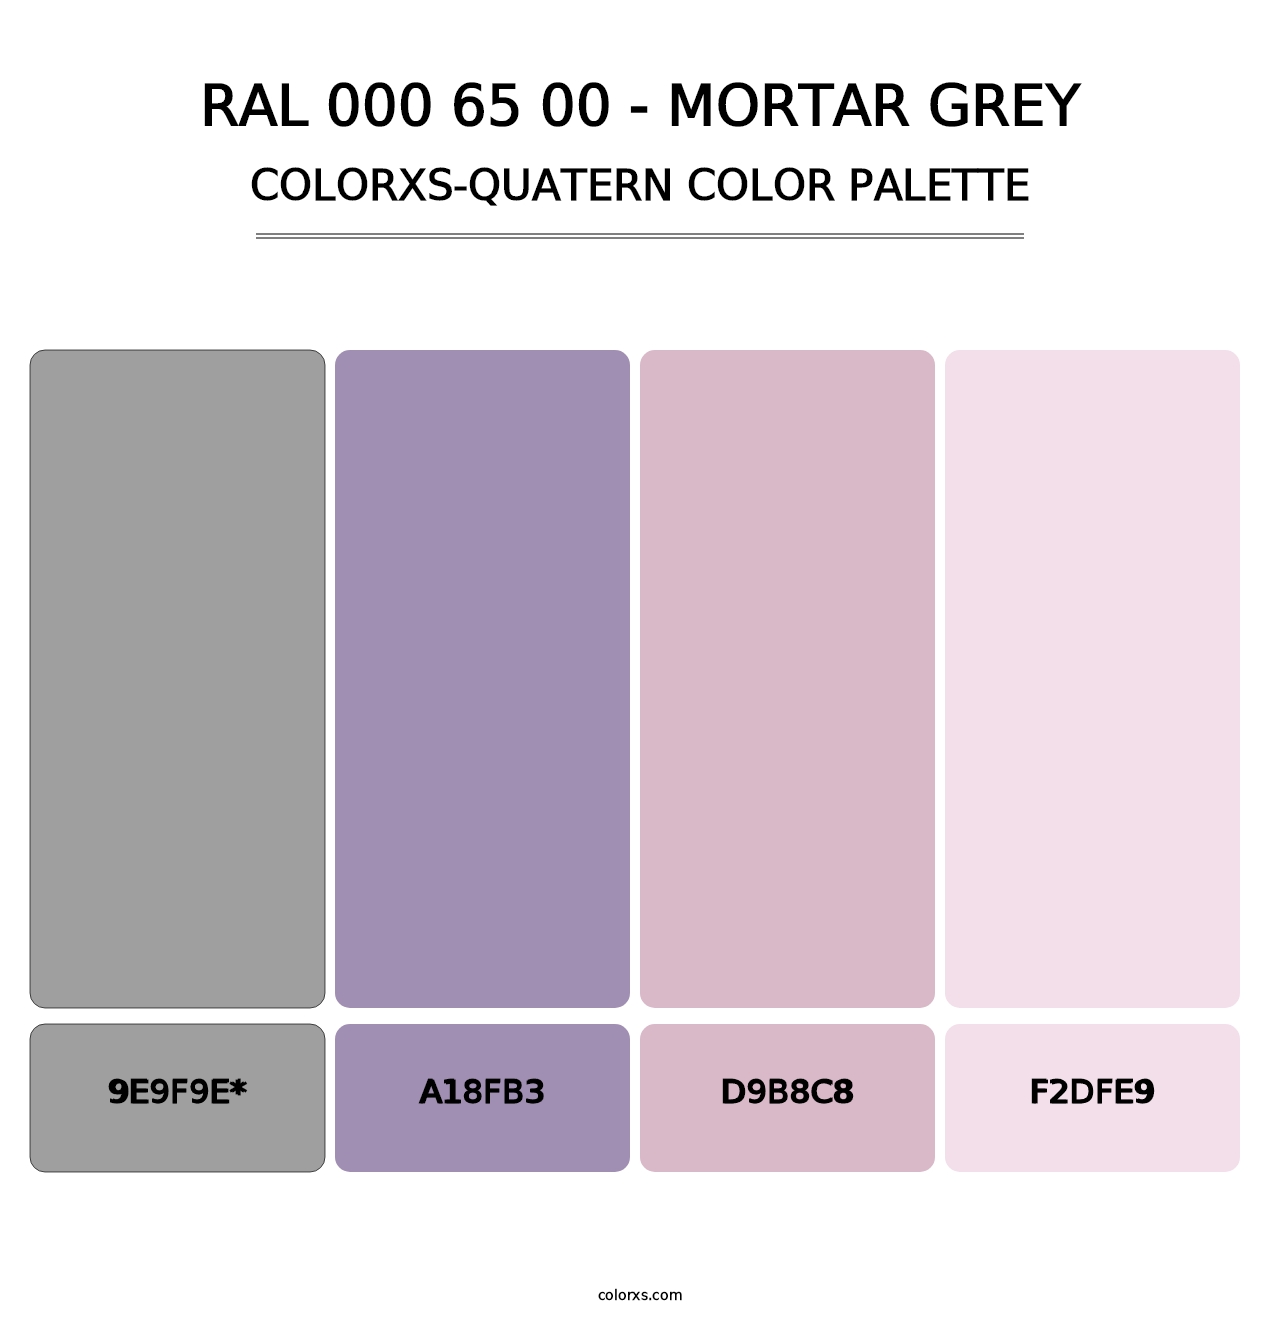 RAL 000 65 00 - Mortar Grey - Colorxs Quatern Palette